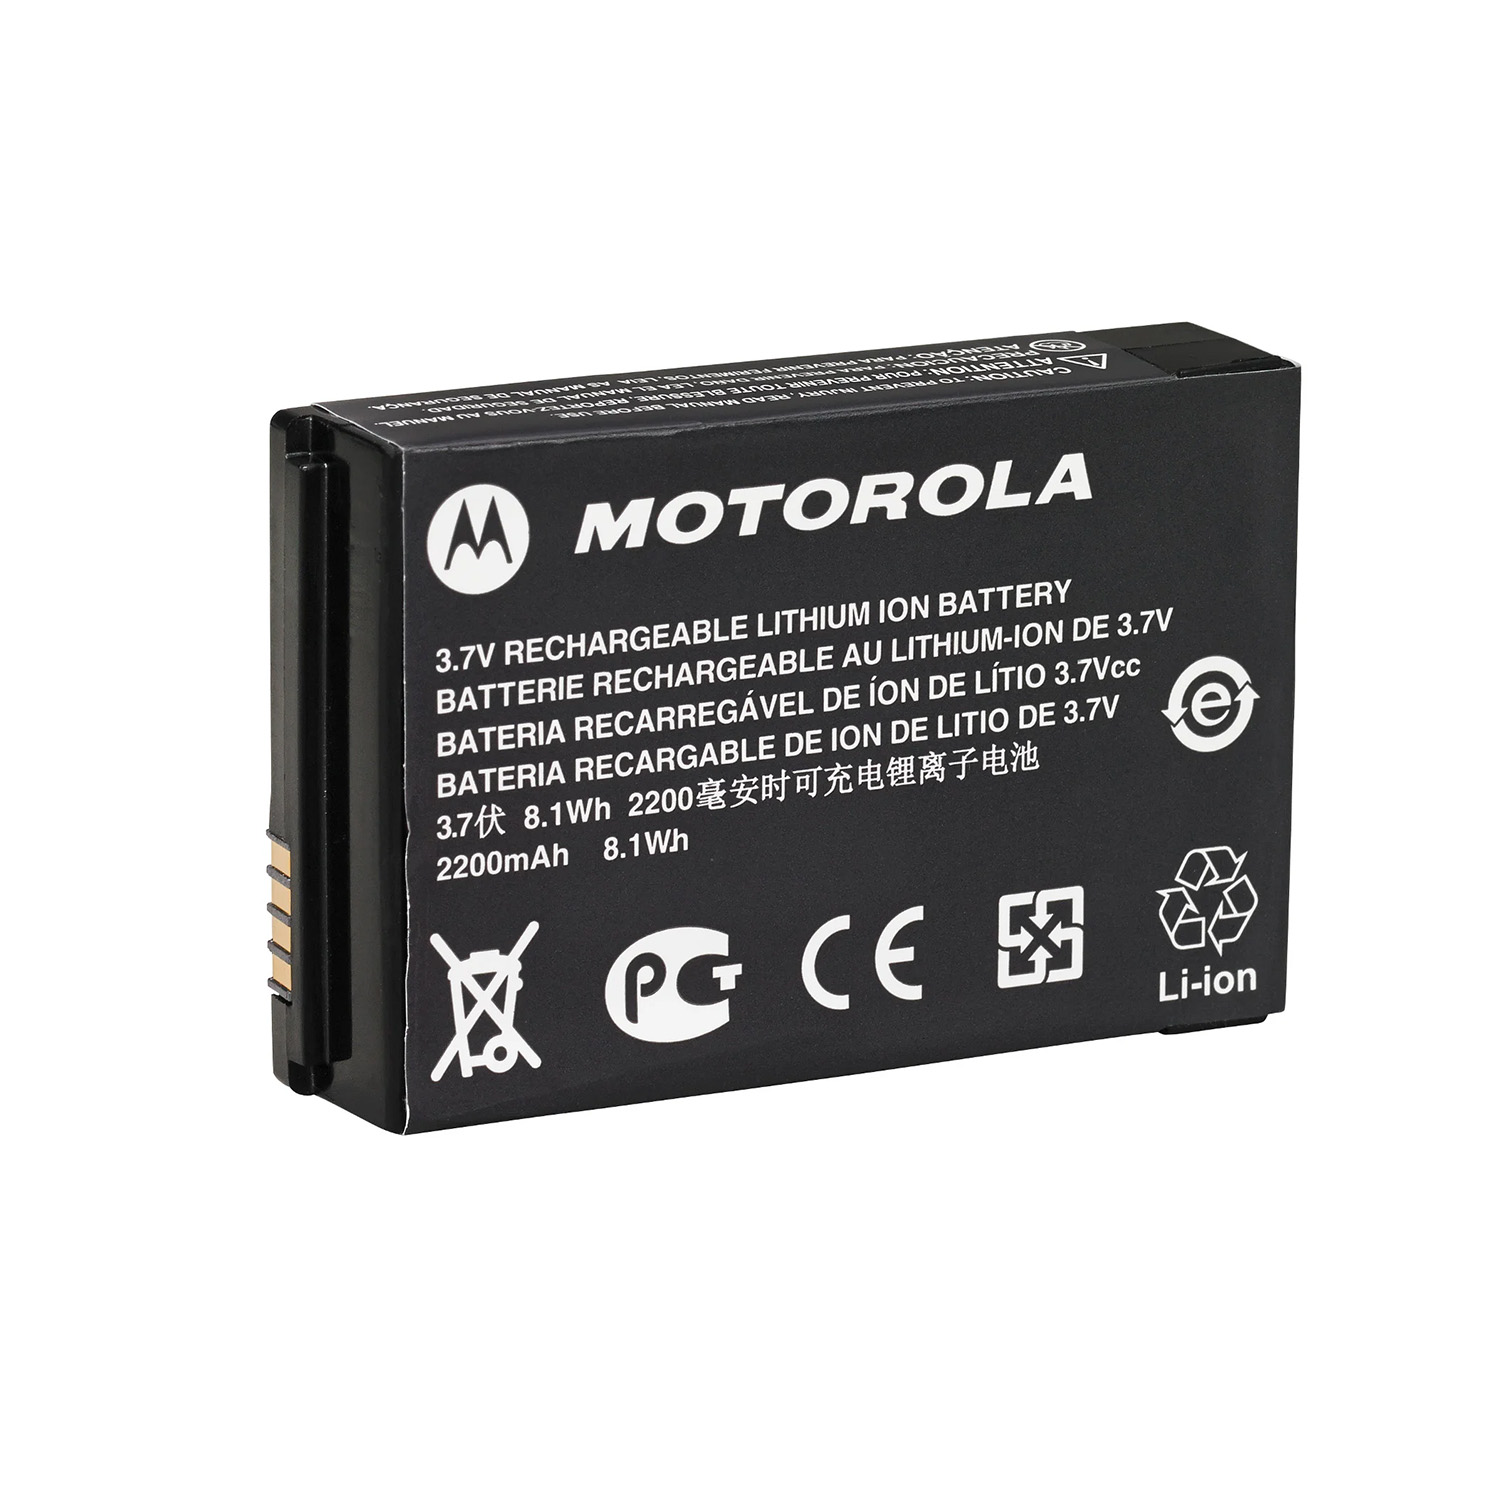 Motorola SL1600 Li-Ion 2300mAH Battery